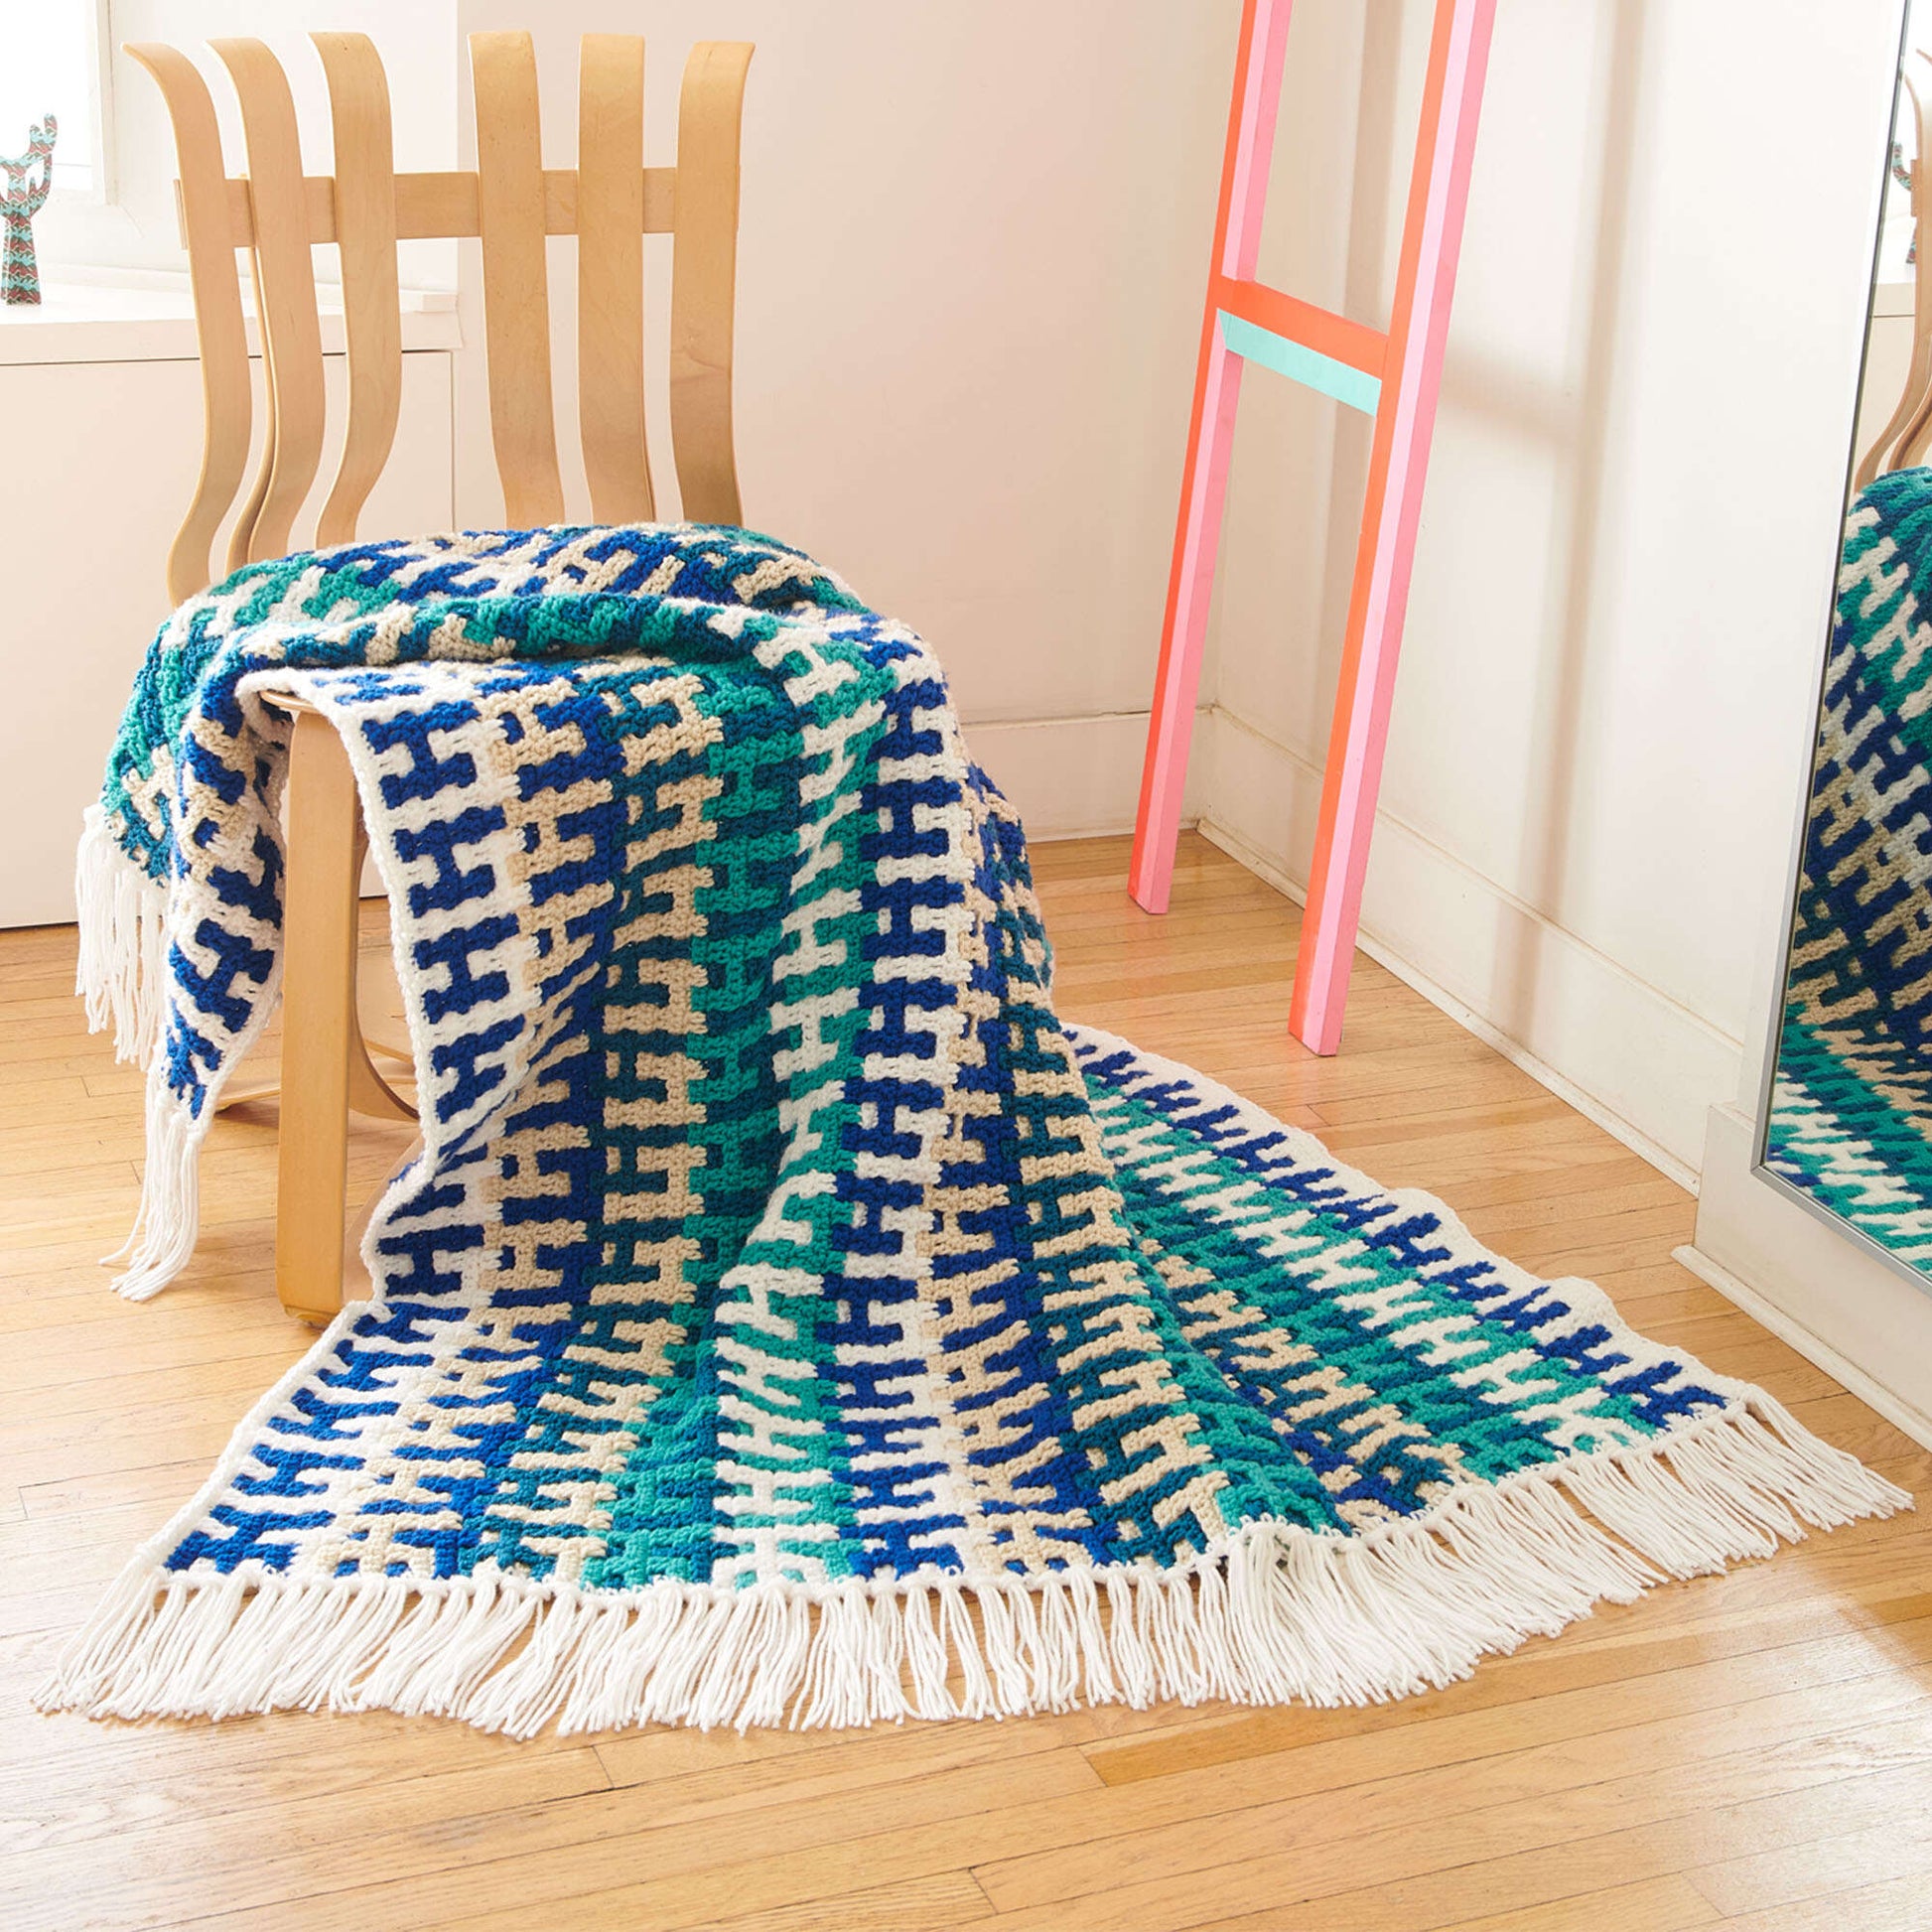 Free Caron Frenetic Stripes Mosaic Crochet Blanket Pattern